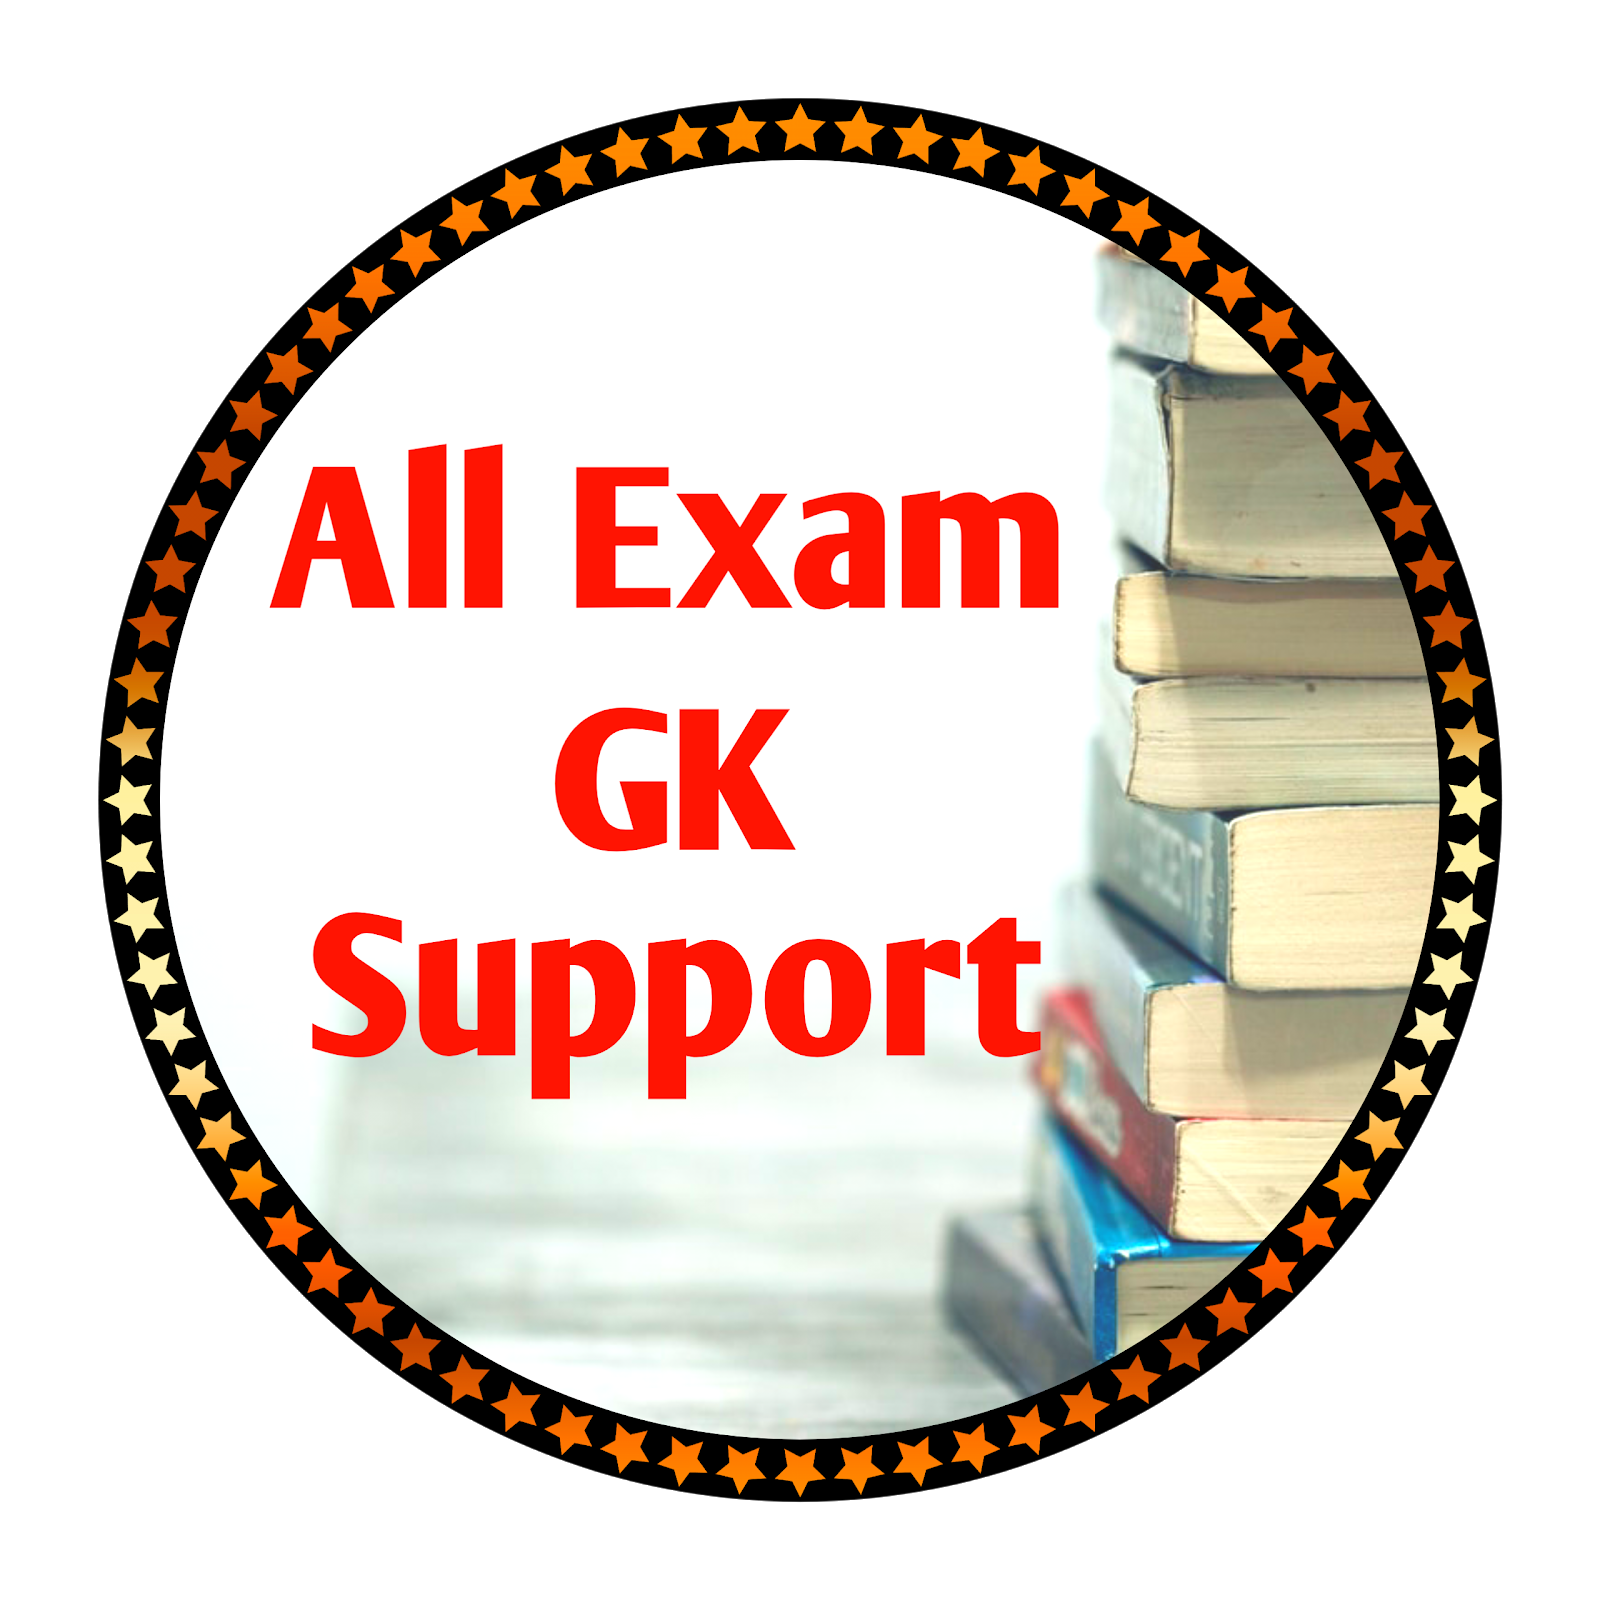 All Exam GK Support